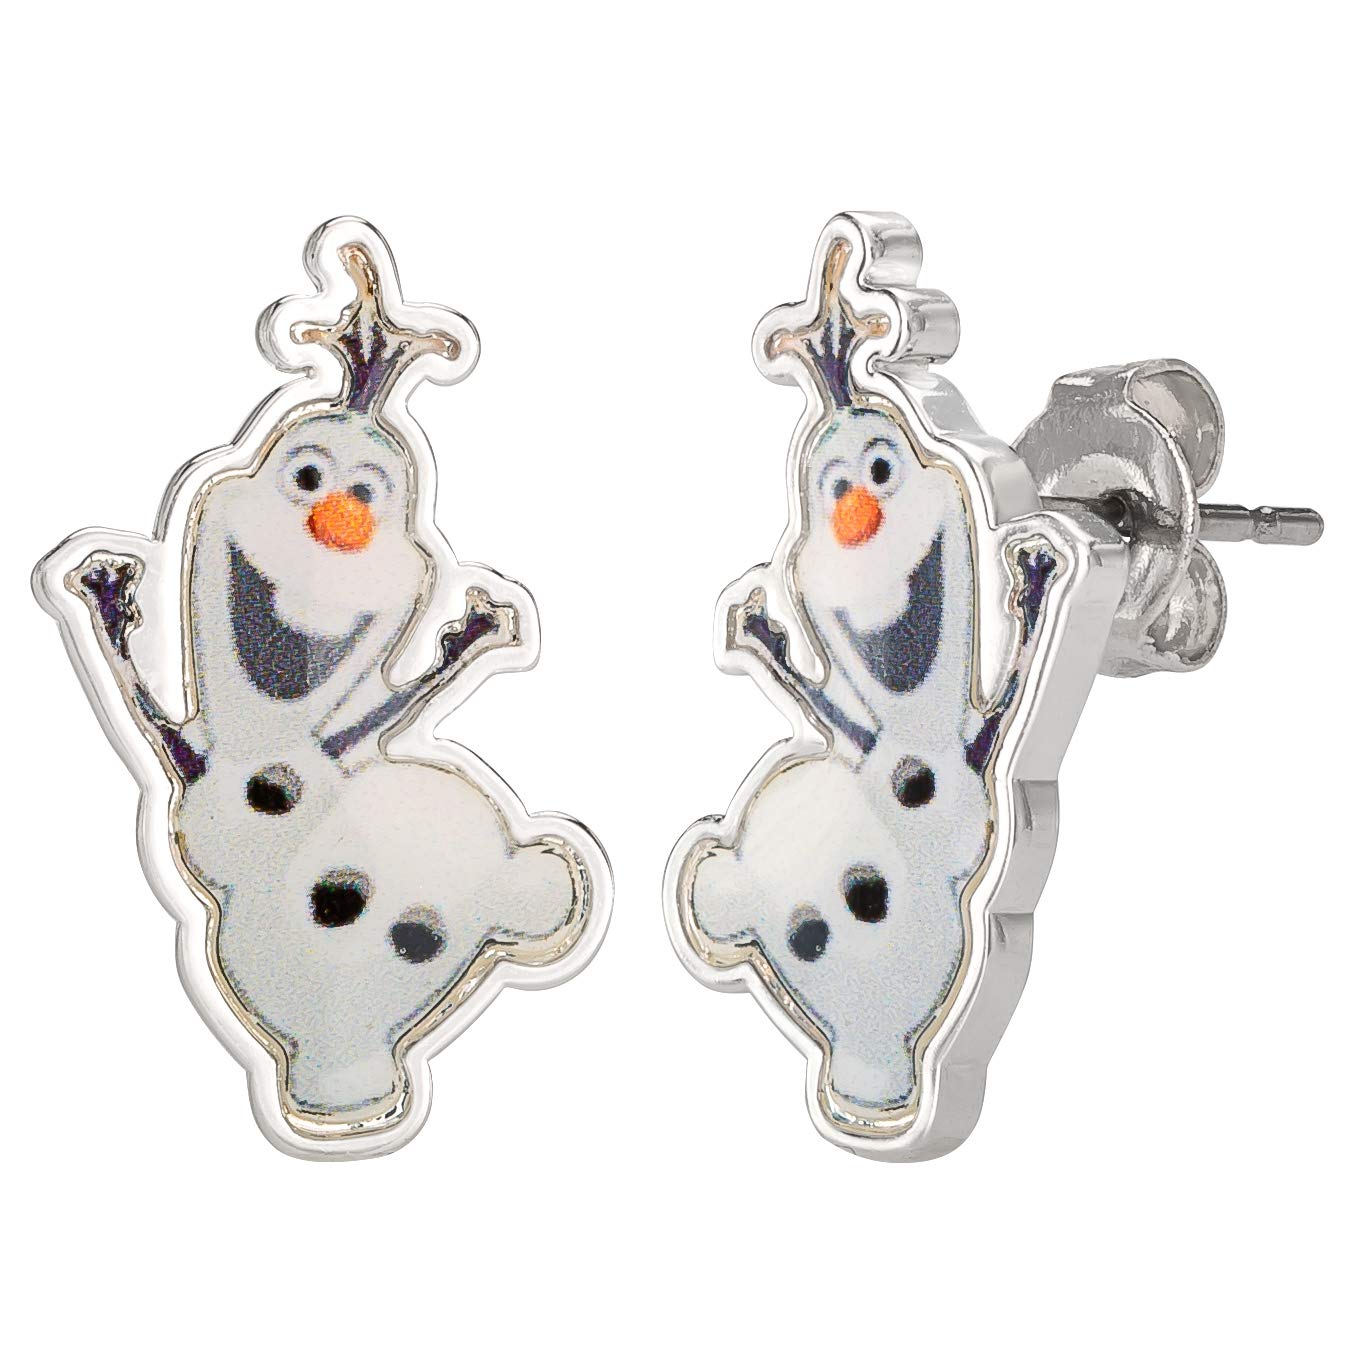 Disney Womens Frozen II Earrings - Silver Plated Stud Earrings with Anna, Elsa, and Olaf - Frozen Earrings - Disney Earrings